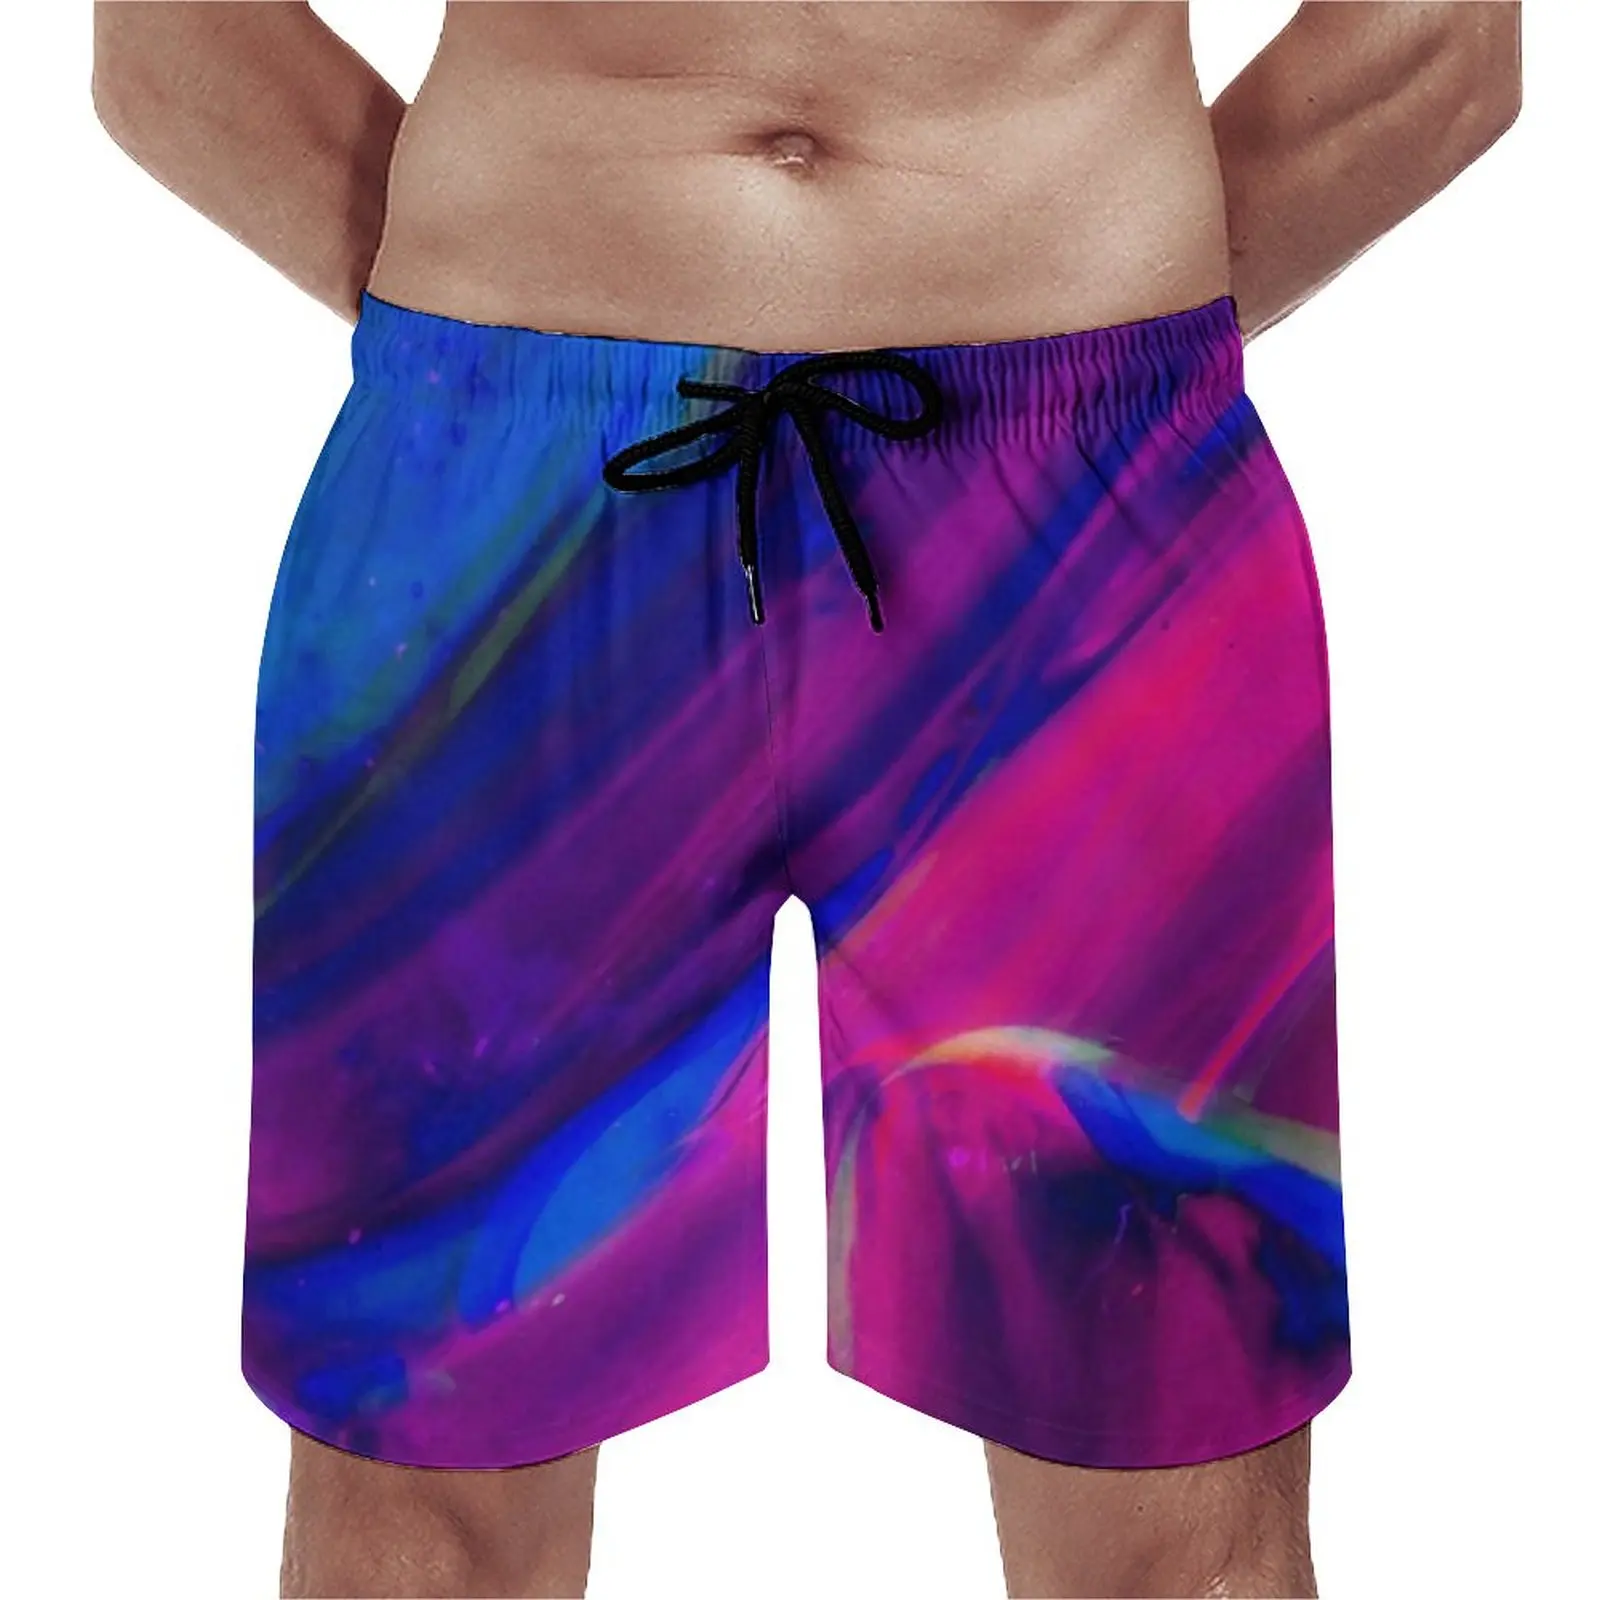 

Abstract Neon Paint Gym Shorts Summer Splatter Art Print Running Beach Shorts Fast Dry Hawaii Design Large Size Swimming Trunks